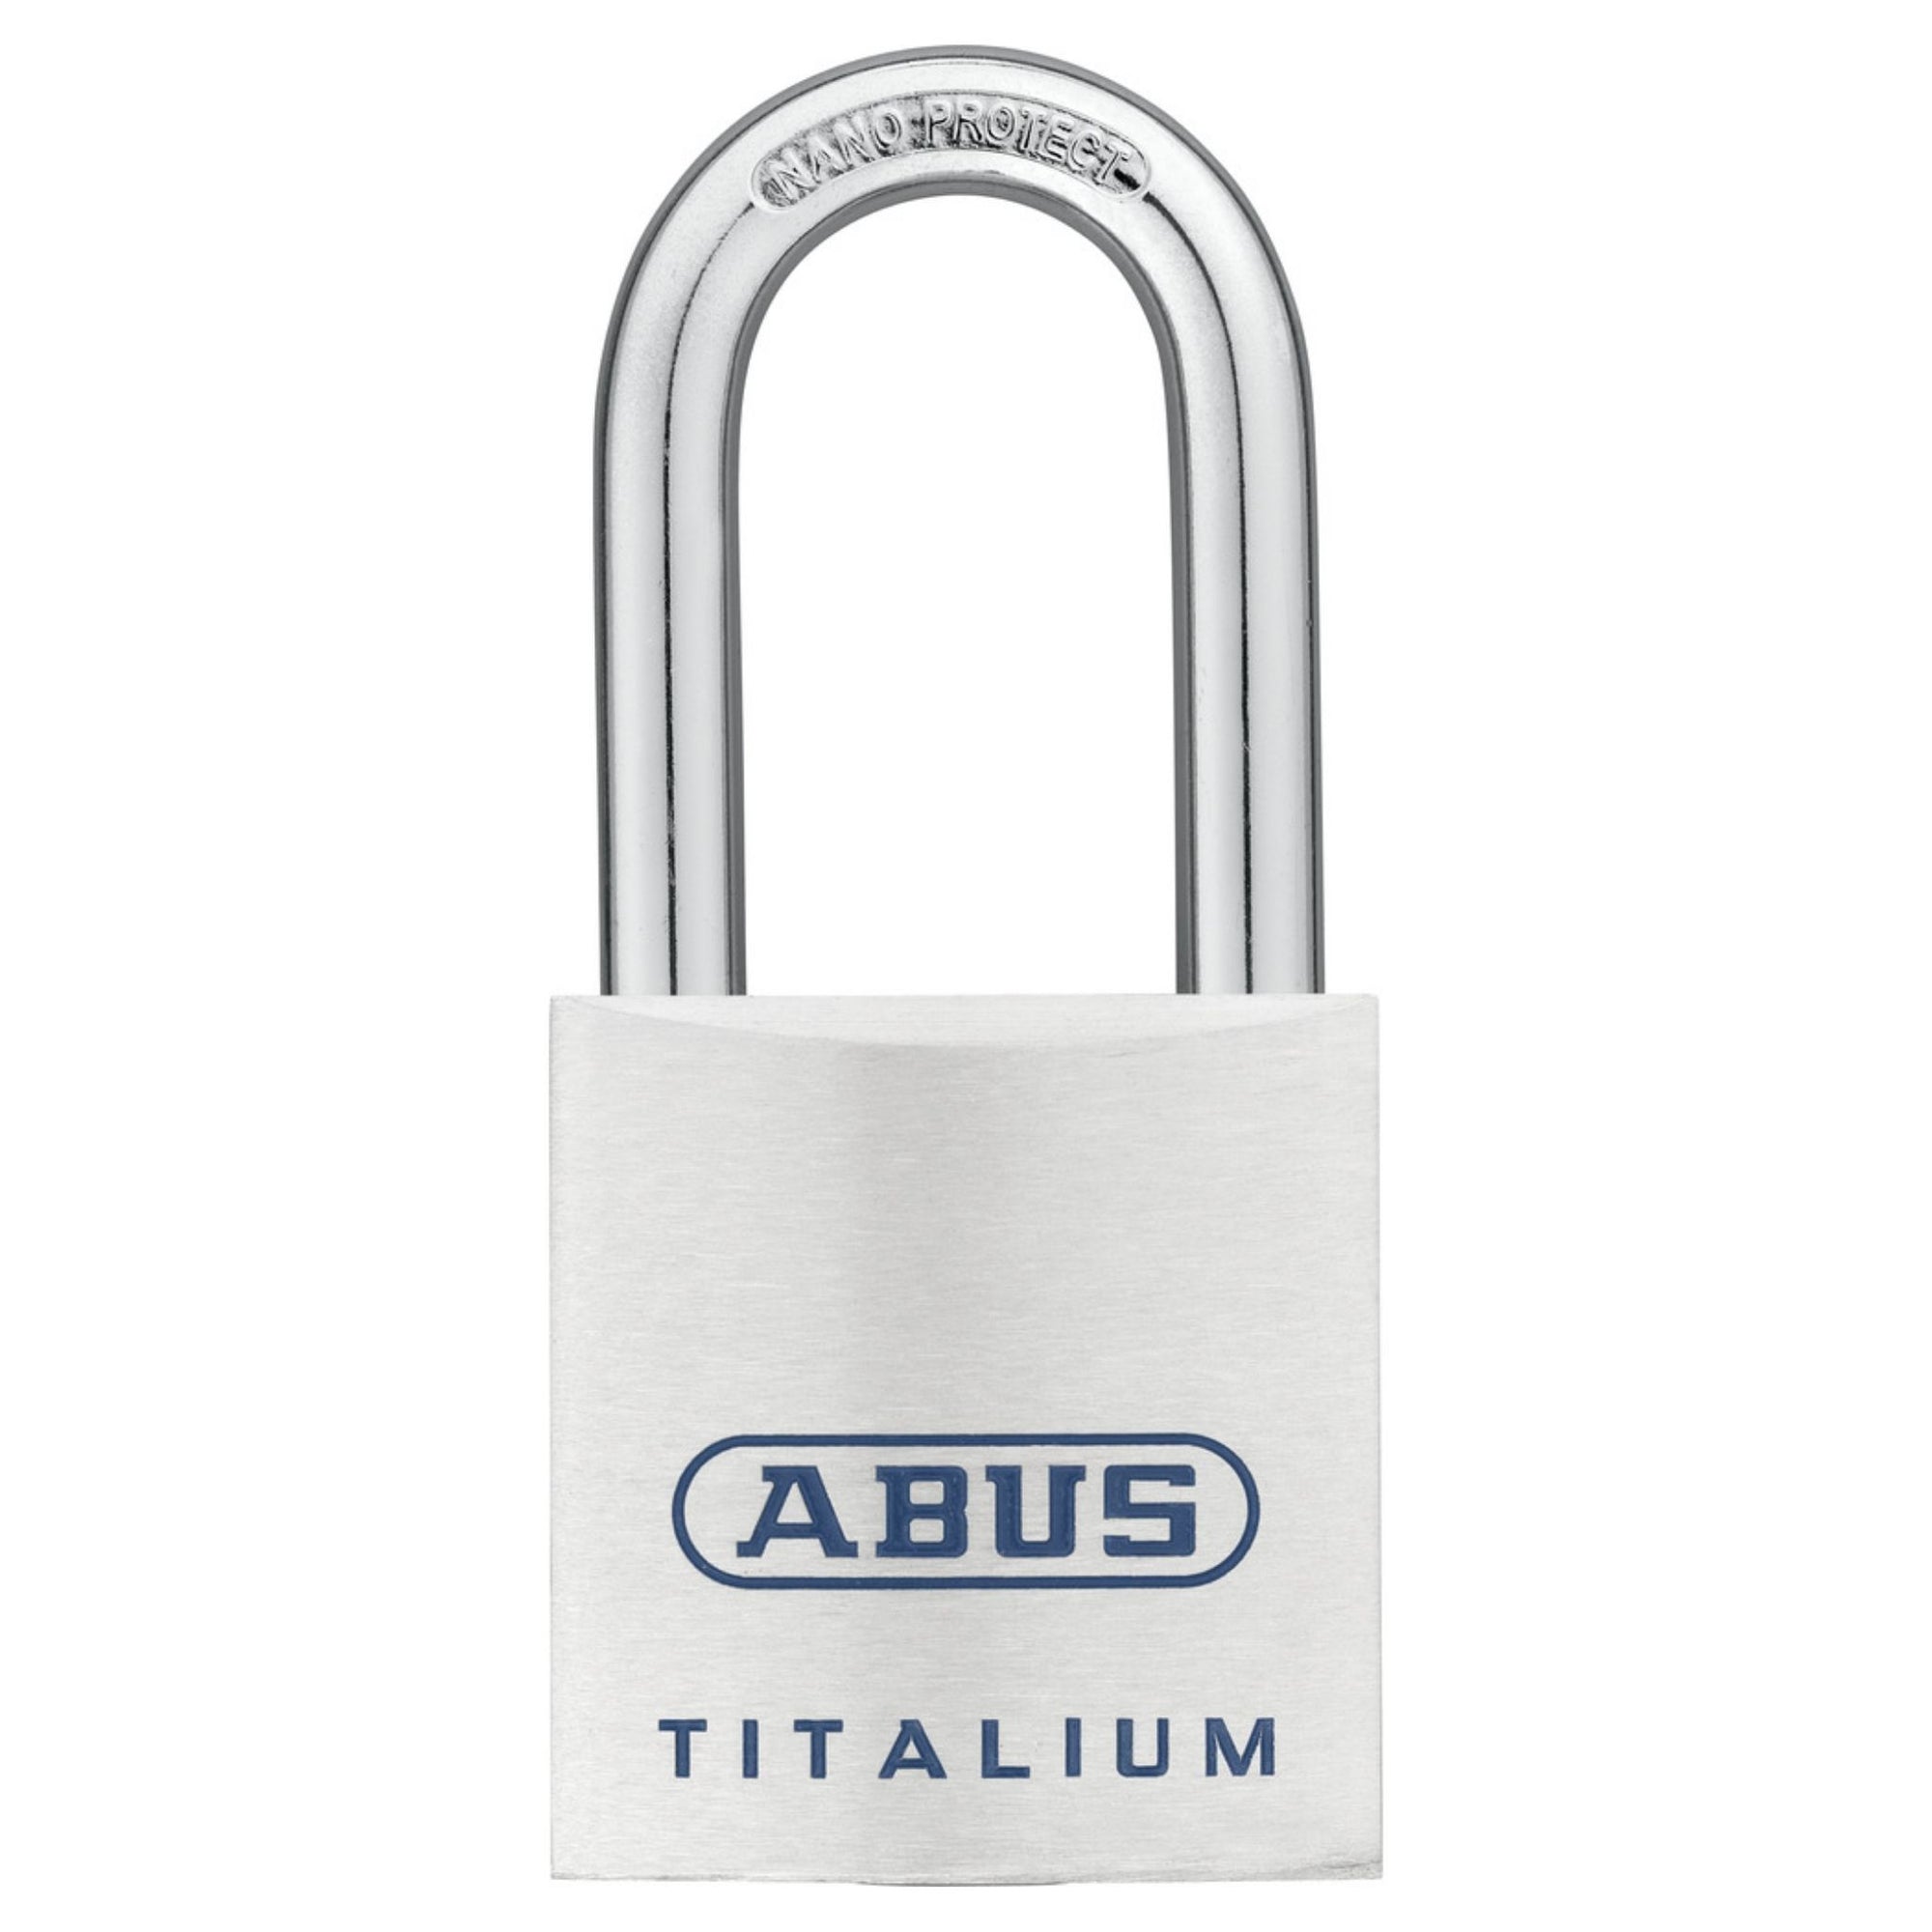 Abus 80TI/40HB40 KA Titalium Padlock Keyed Alike (KA) Locks with 1-9/16-Inch Shackle - The Lock Source